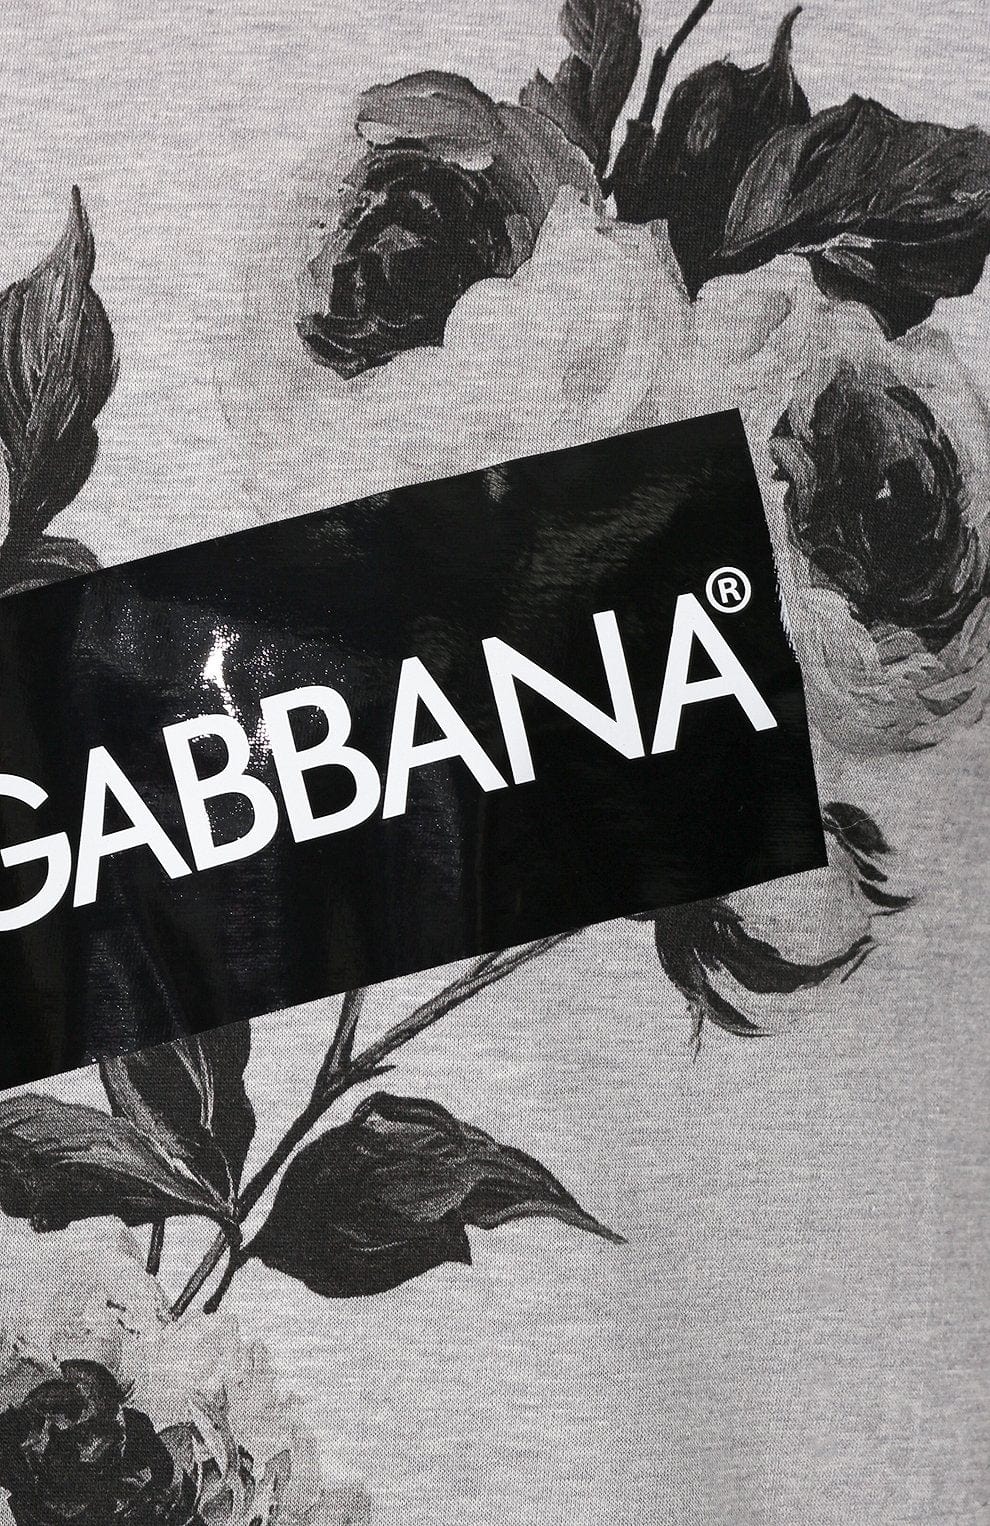 Dolce & Gabbana Floral Printed Cotton-Jersey T-Shirt